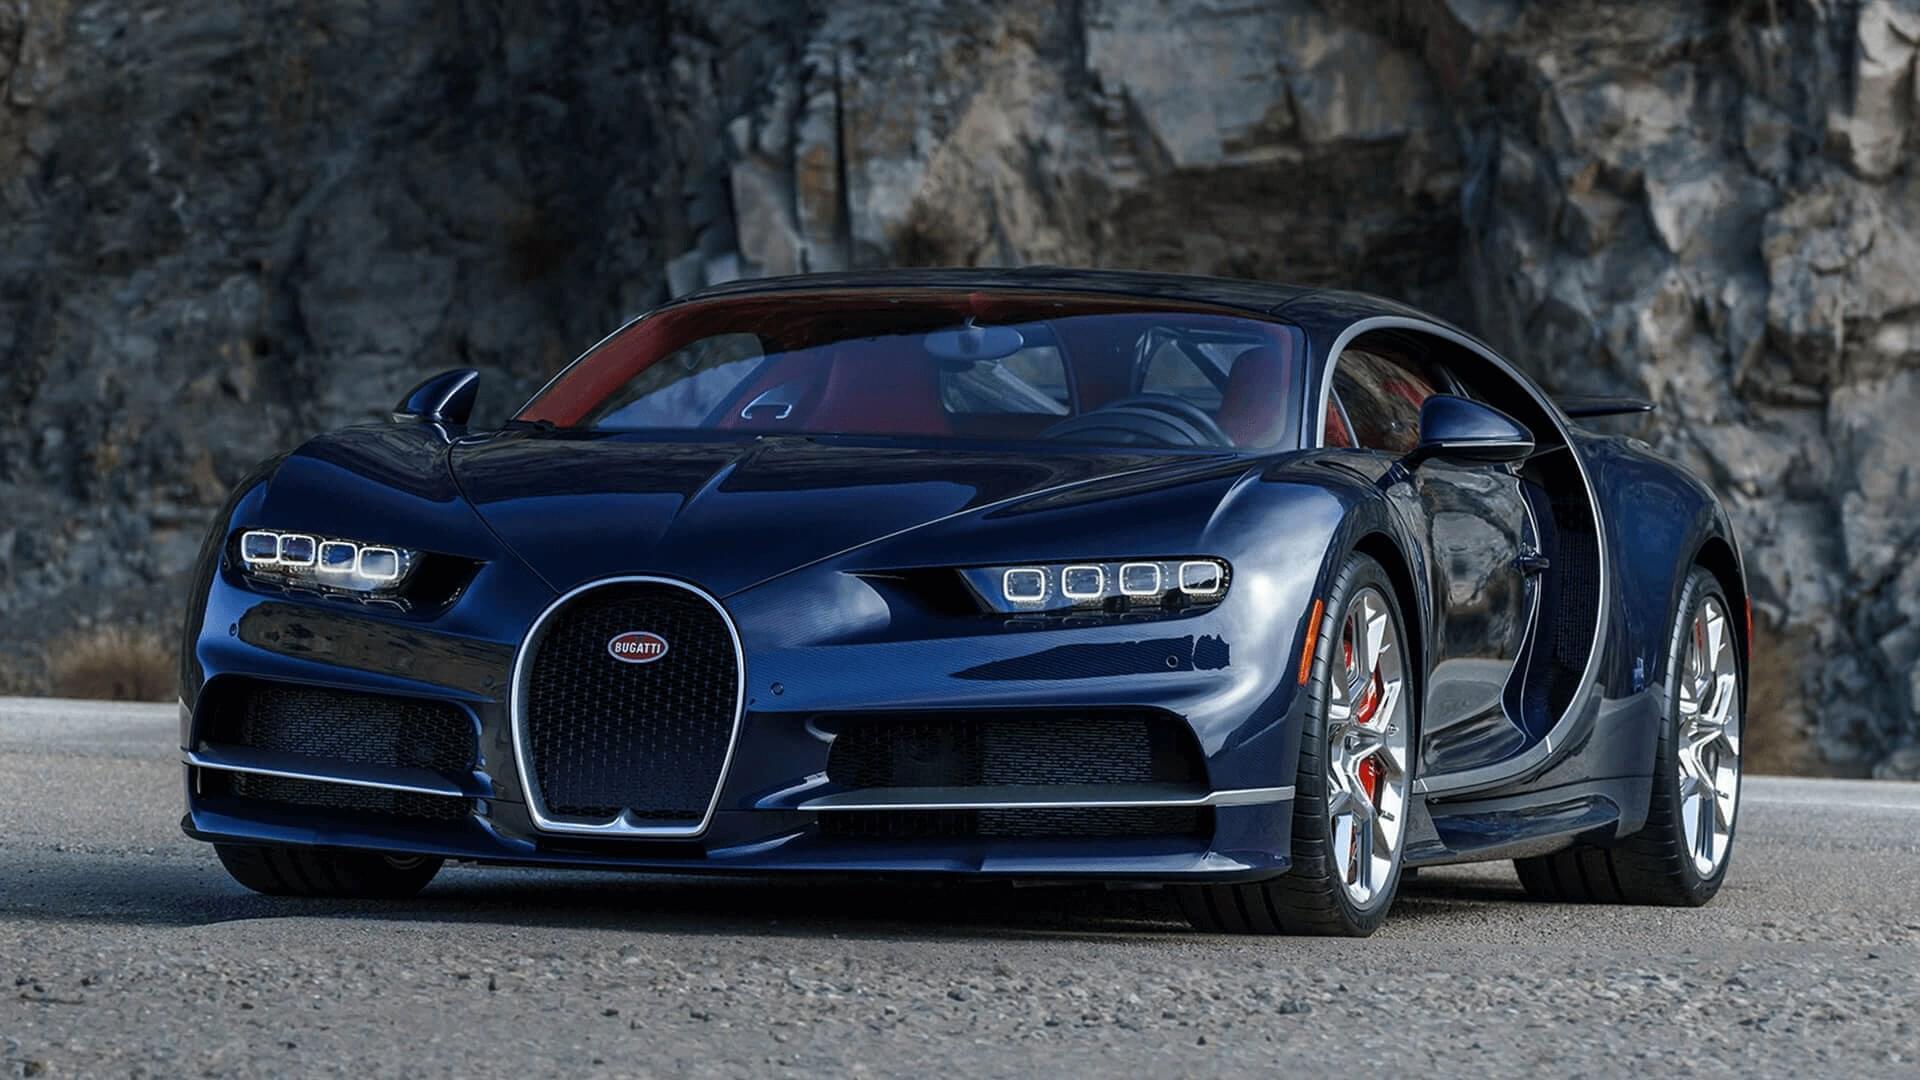 Bugatti Chiron - the luxurious super sports car